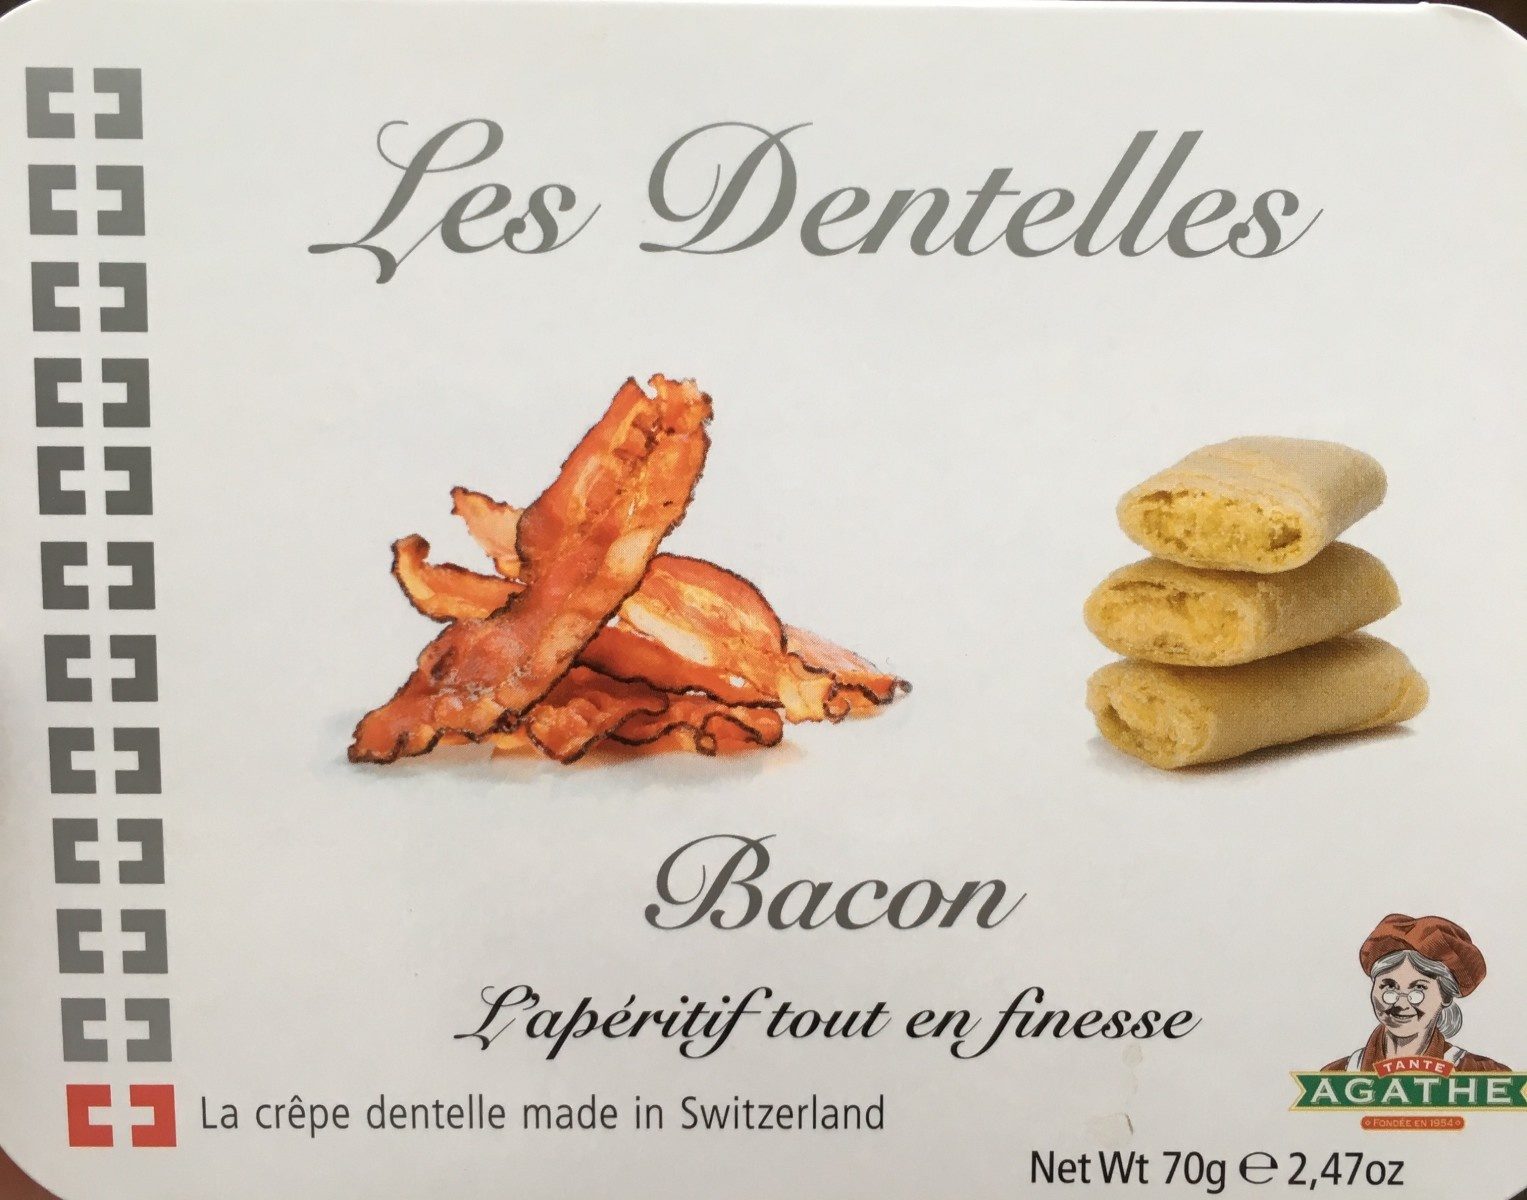 AGATHE Les Dentelles Bacon - Product - fr